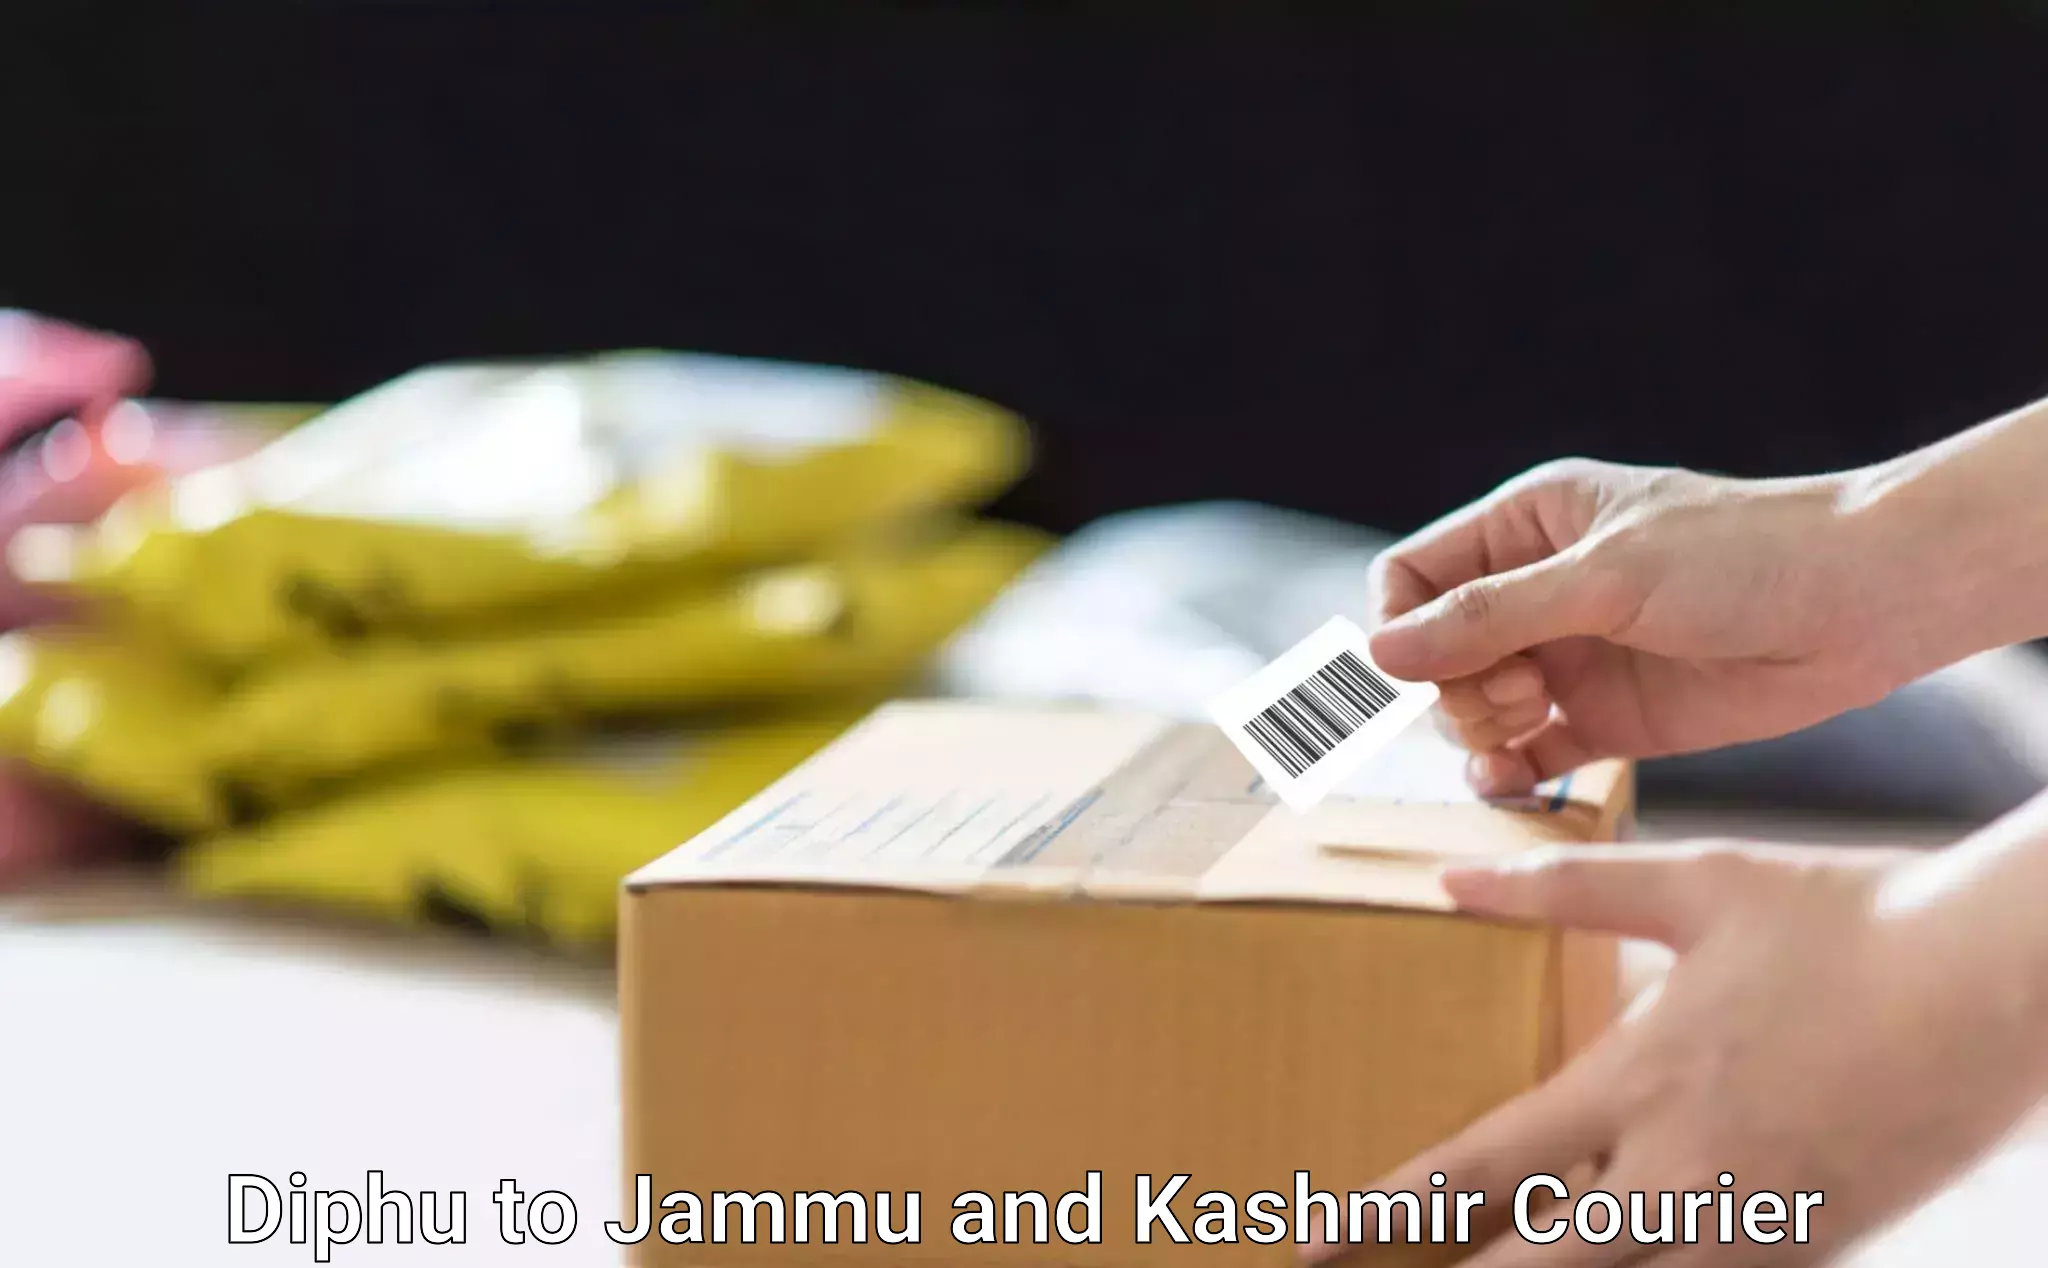 Logistics service provider Diphu to Jammu and Kashmir